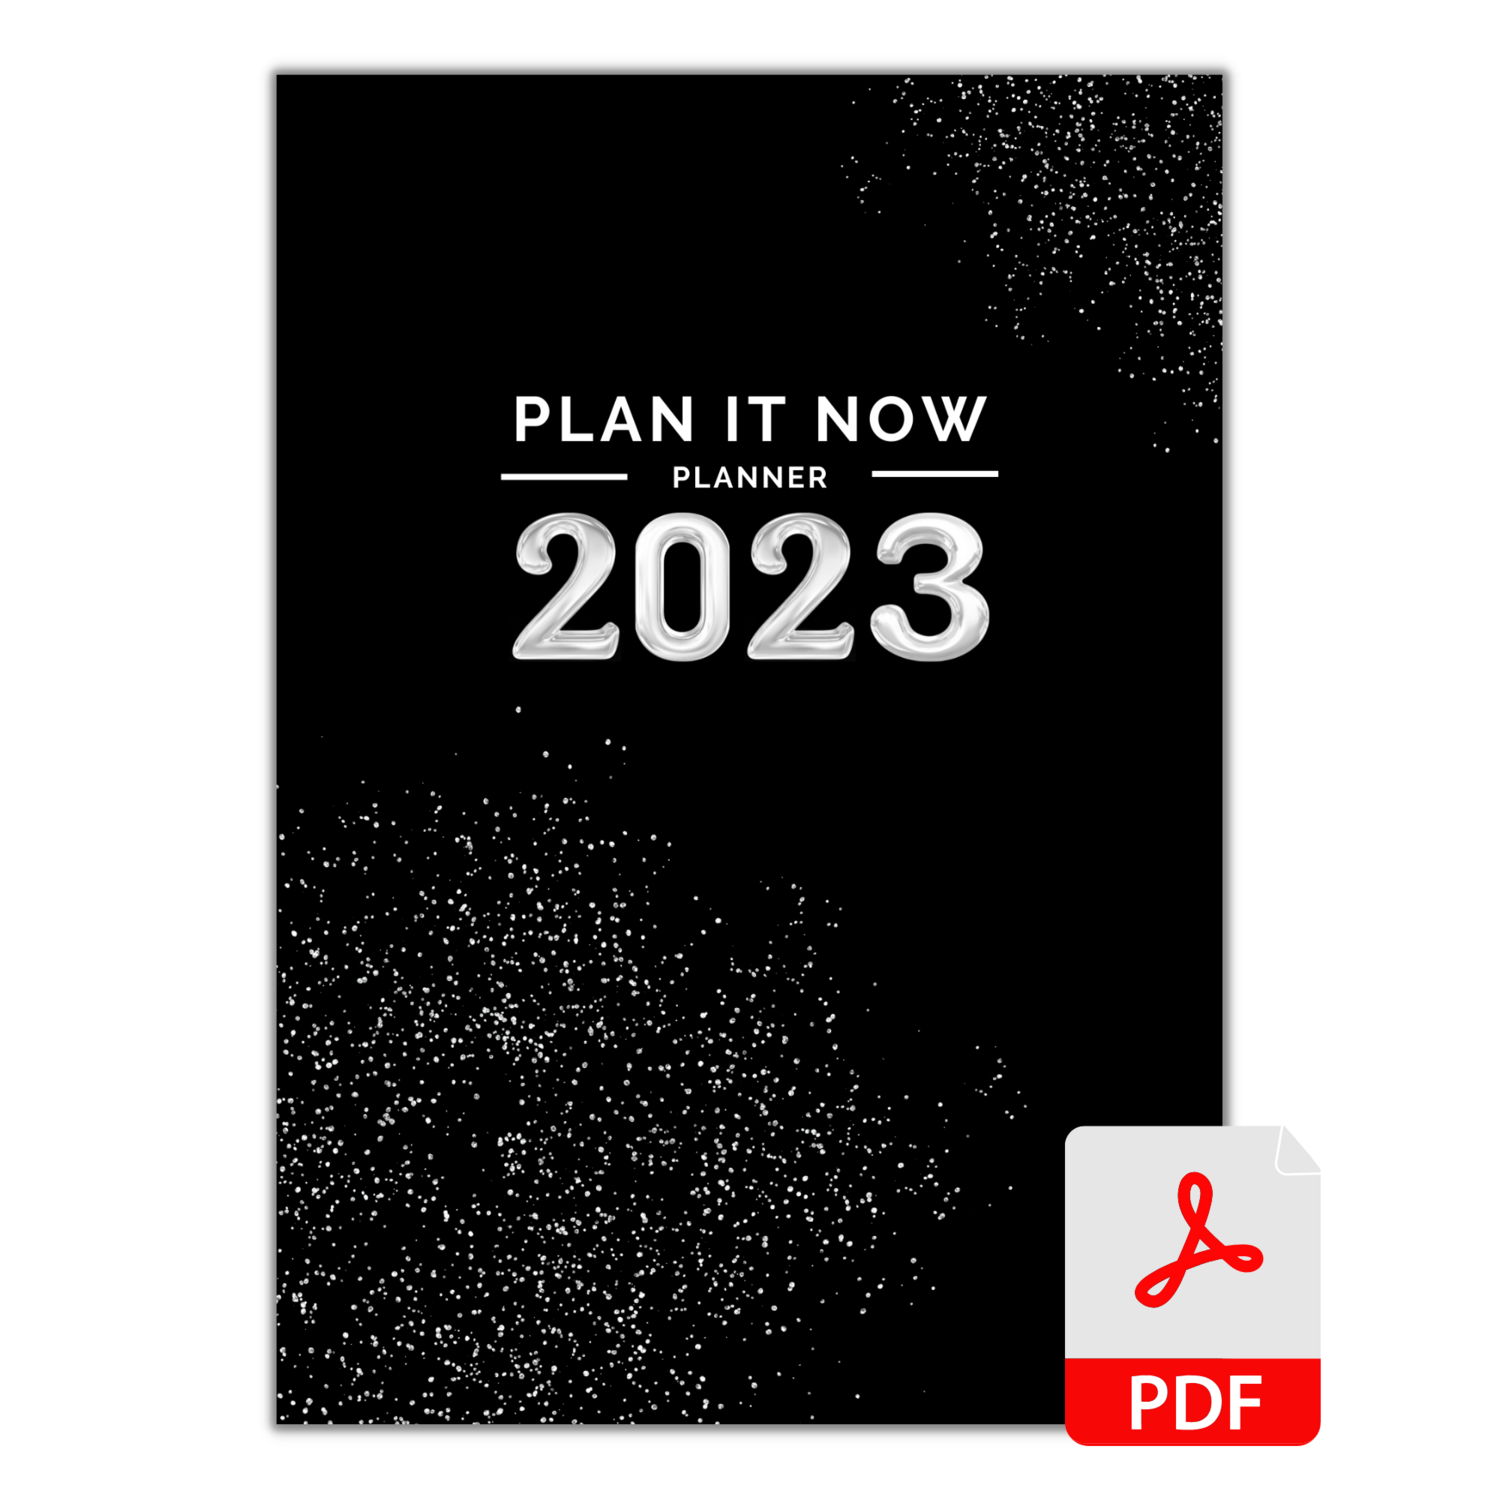 2023 PLAN IT NOW BUSINESS PLANNER -  - PRINTABLE PDF VERSION